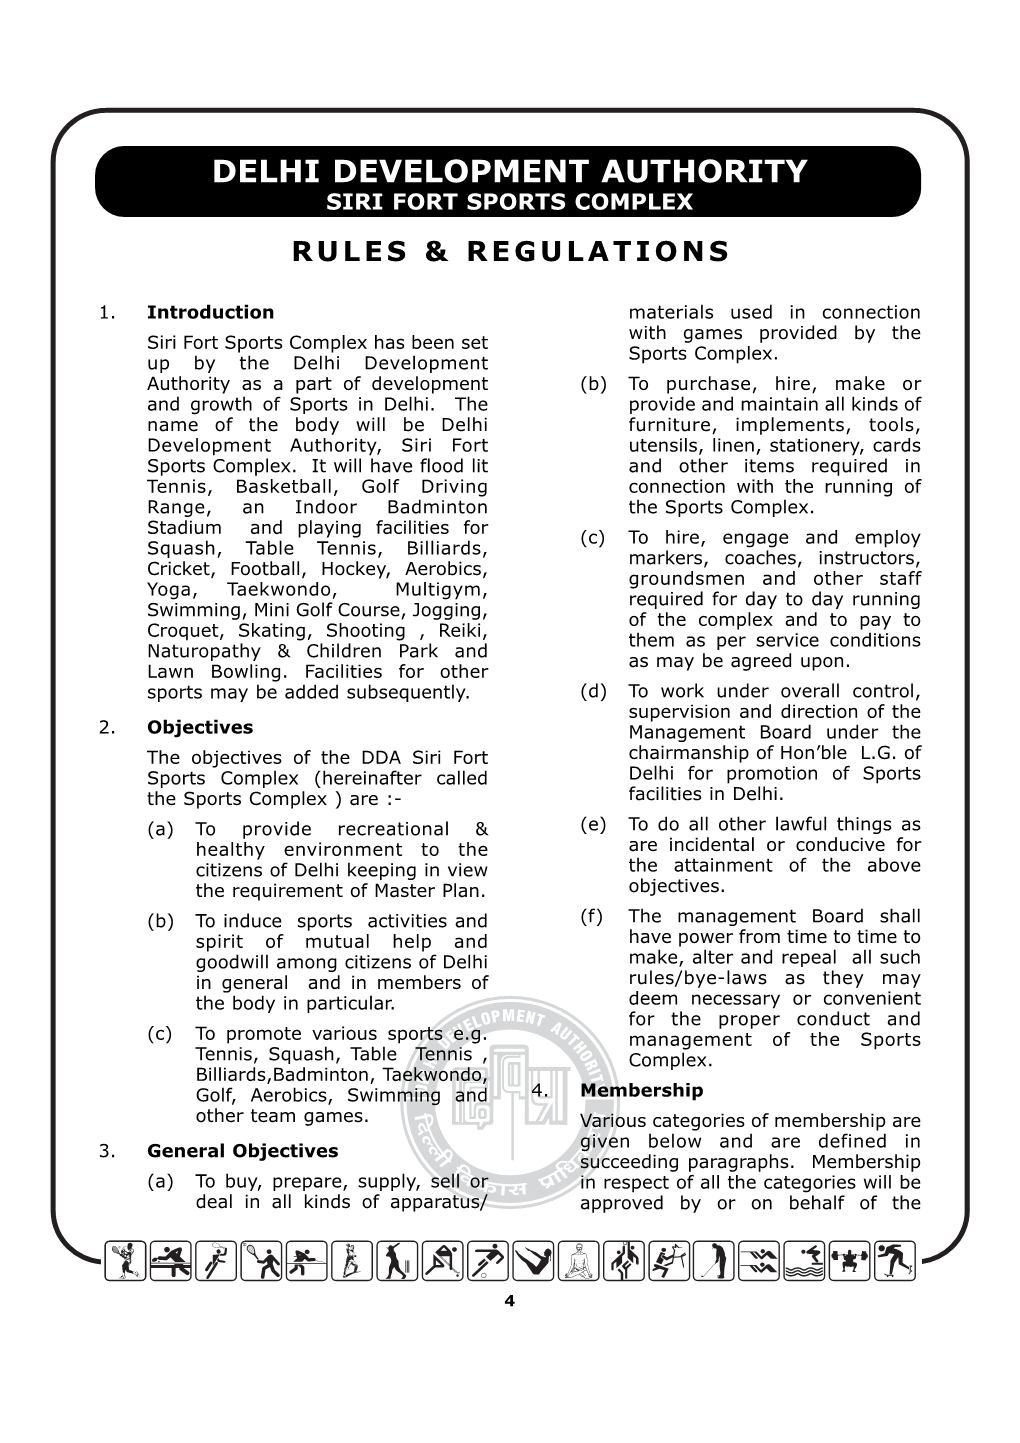 Delhi Development Authority Siri Fort Sports Complex Rules & Regulations